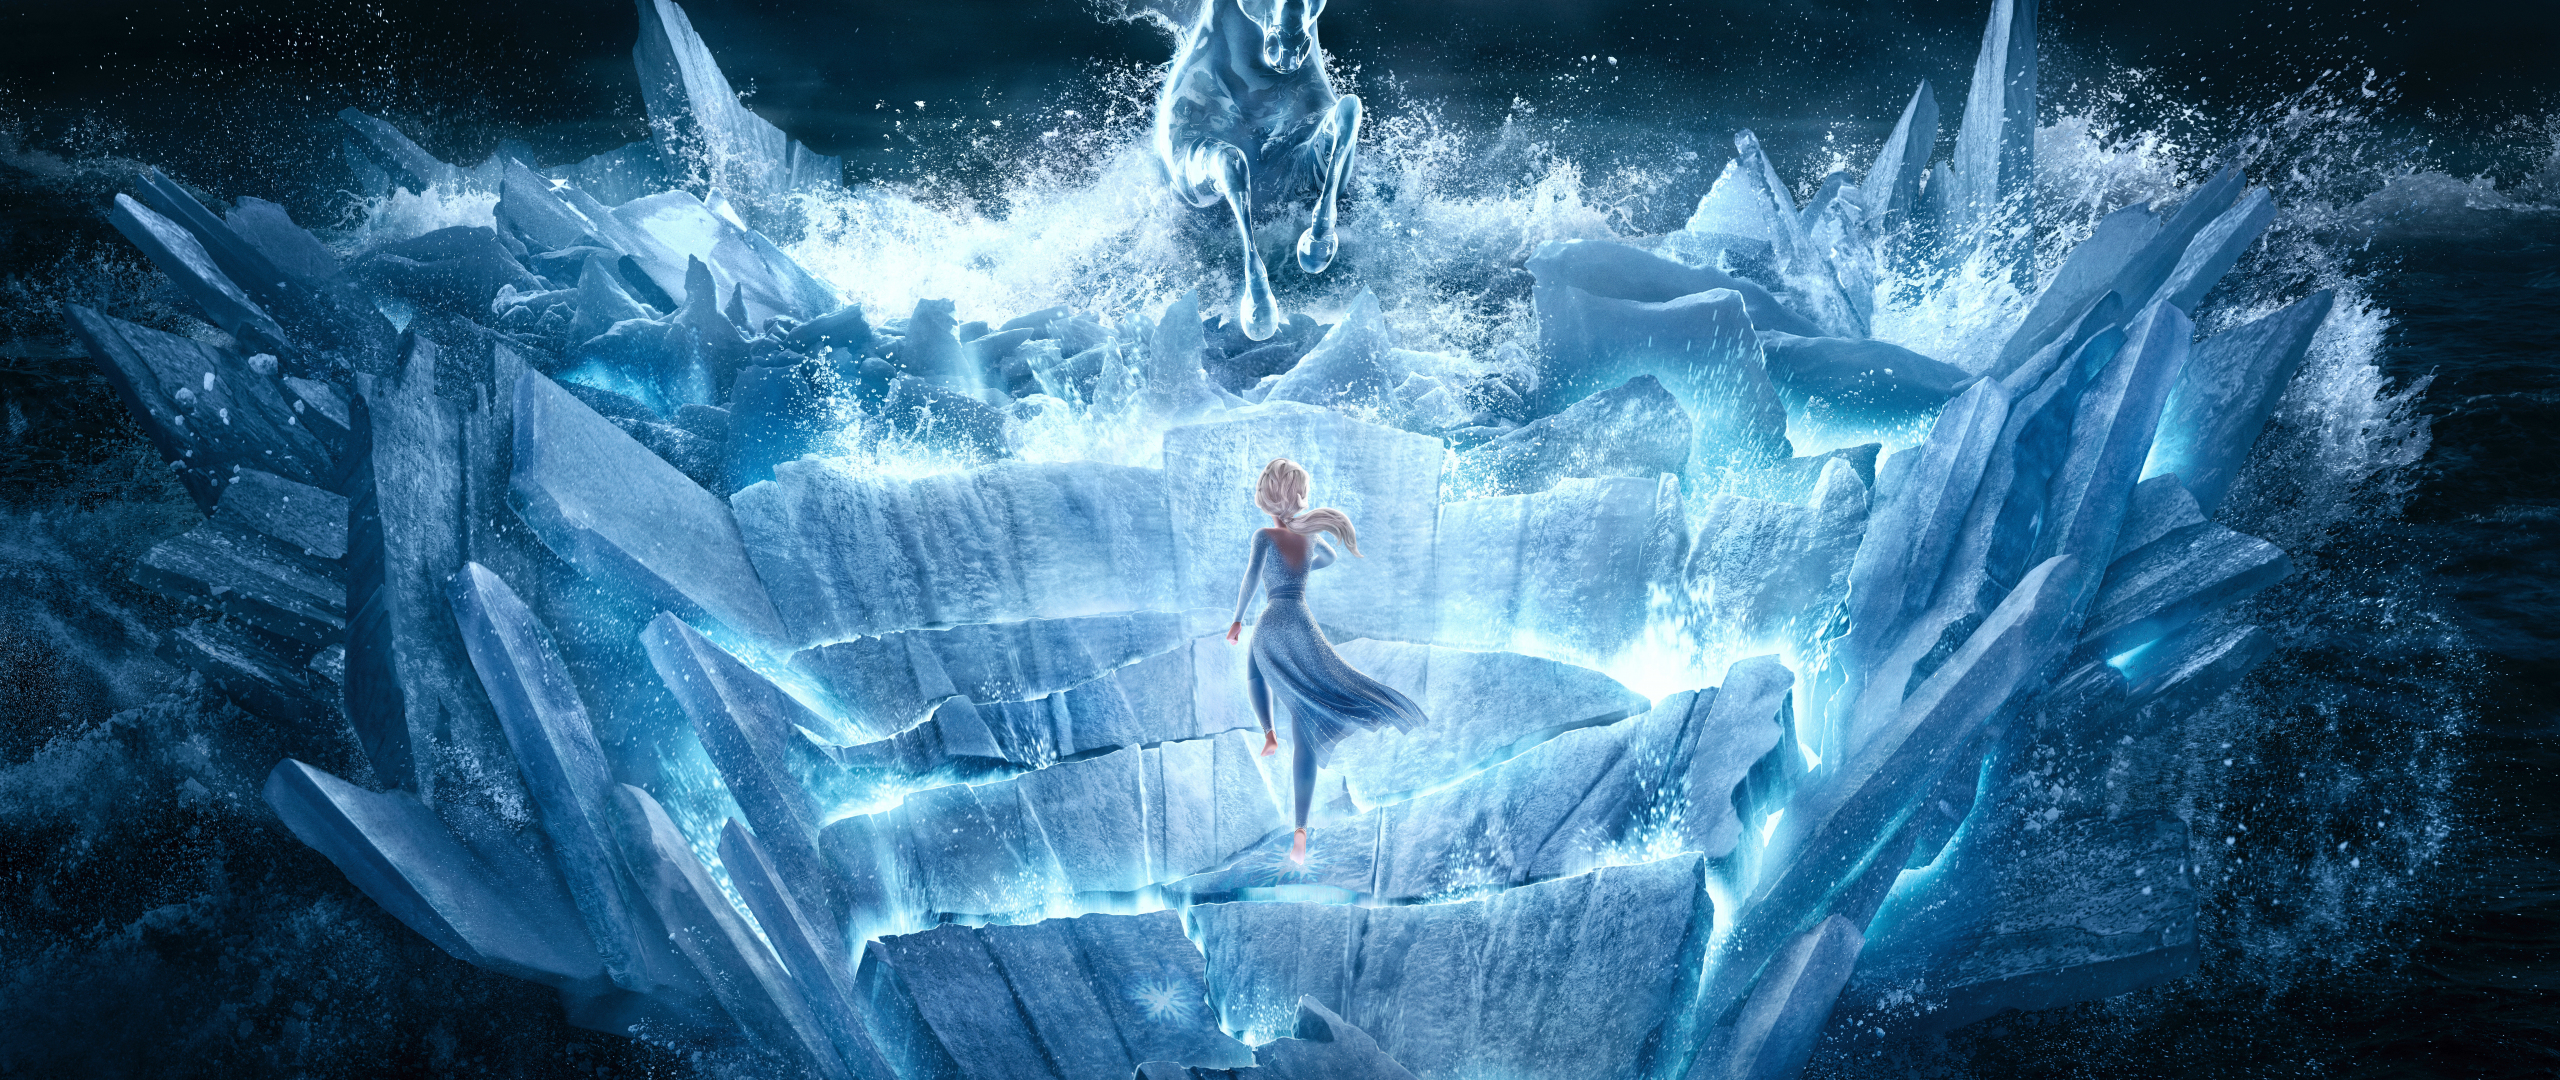 Frozen movie, snow horse, sea ride, 2560x1080 wallpaper